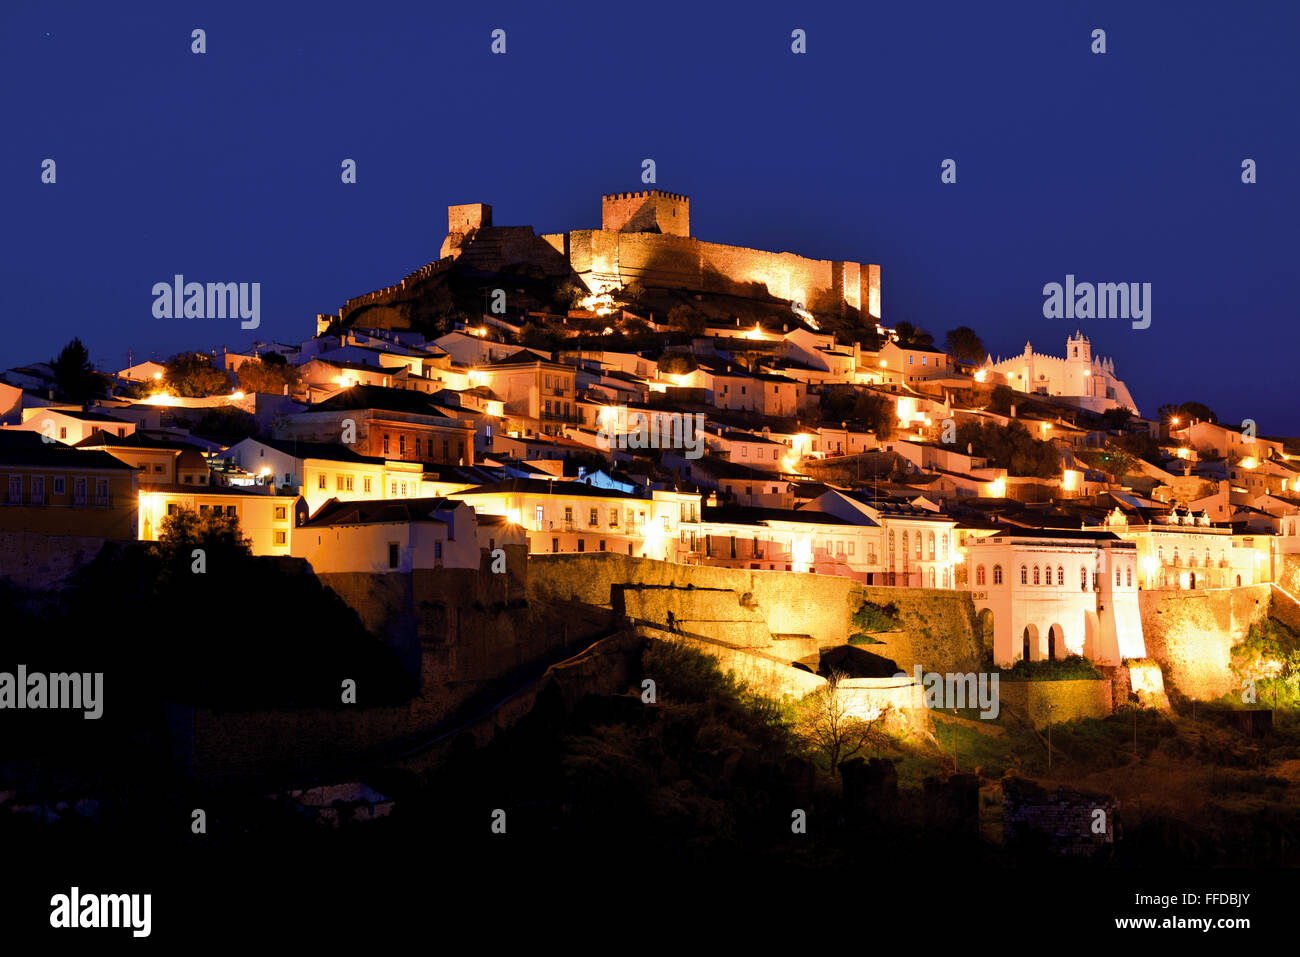 Portugal, Alentejo: Nocturnal view of historic village Mértola Stock Photo